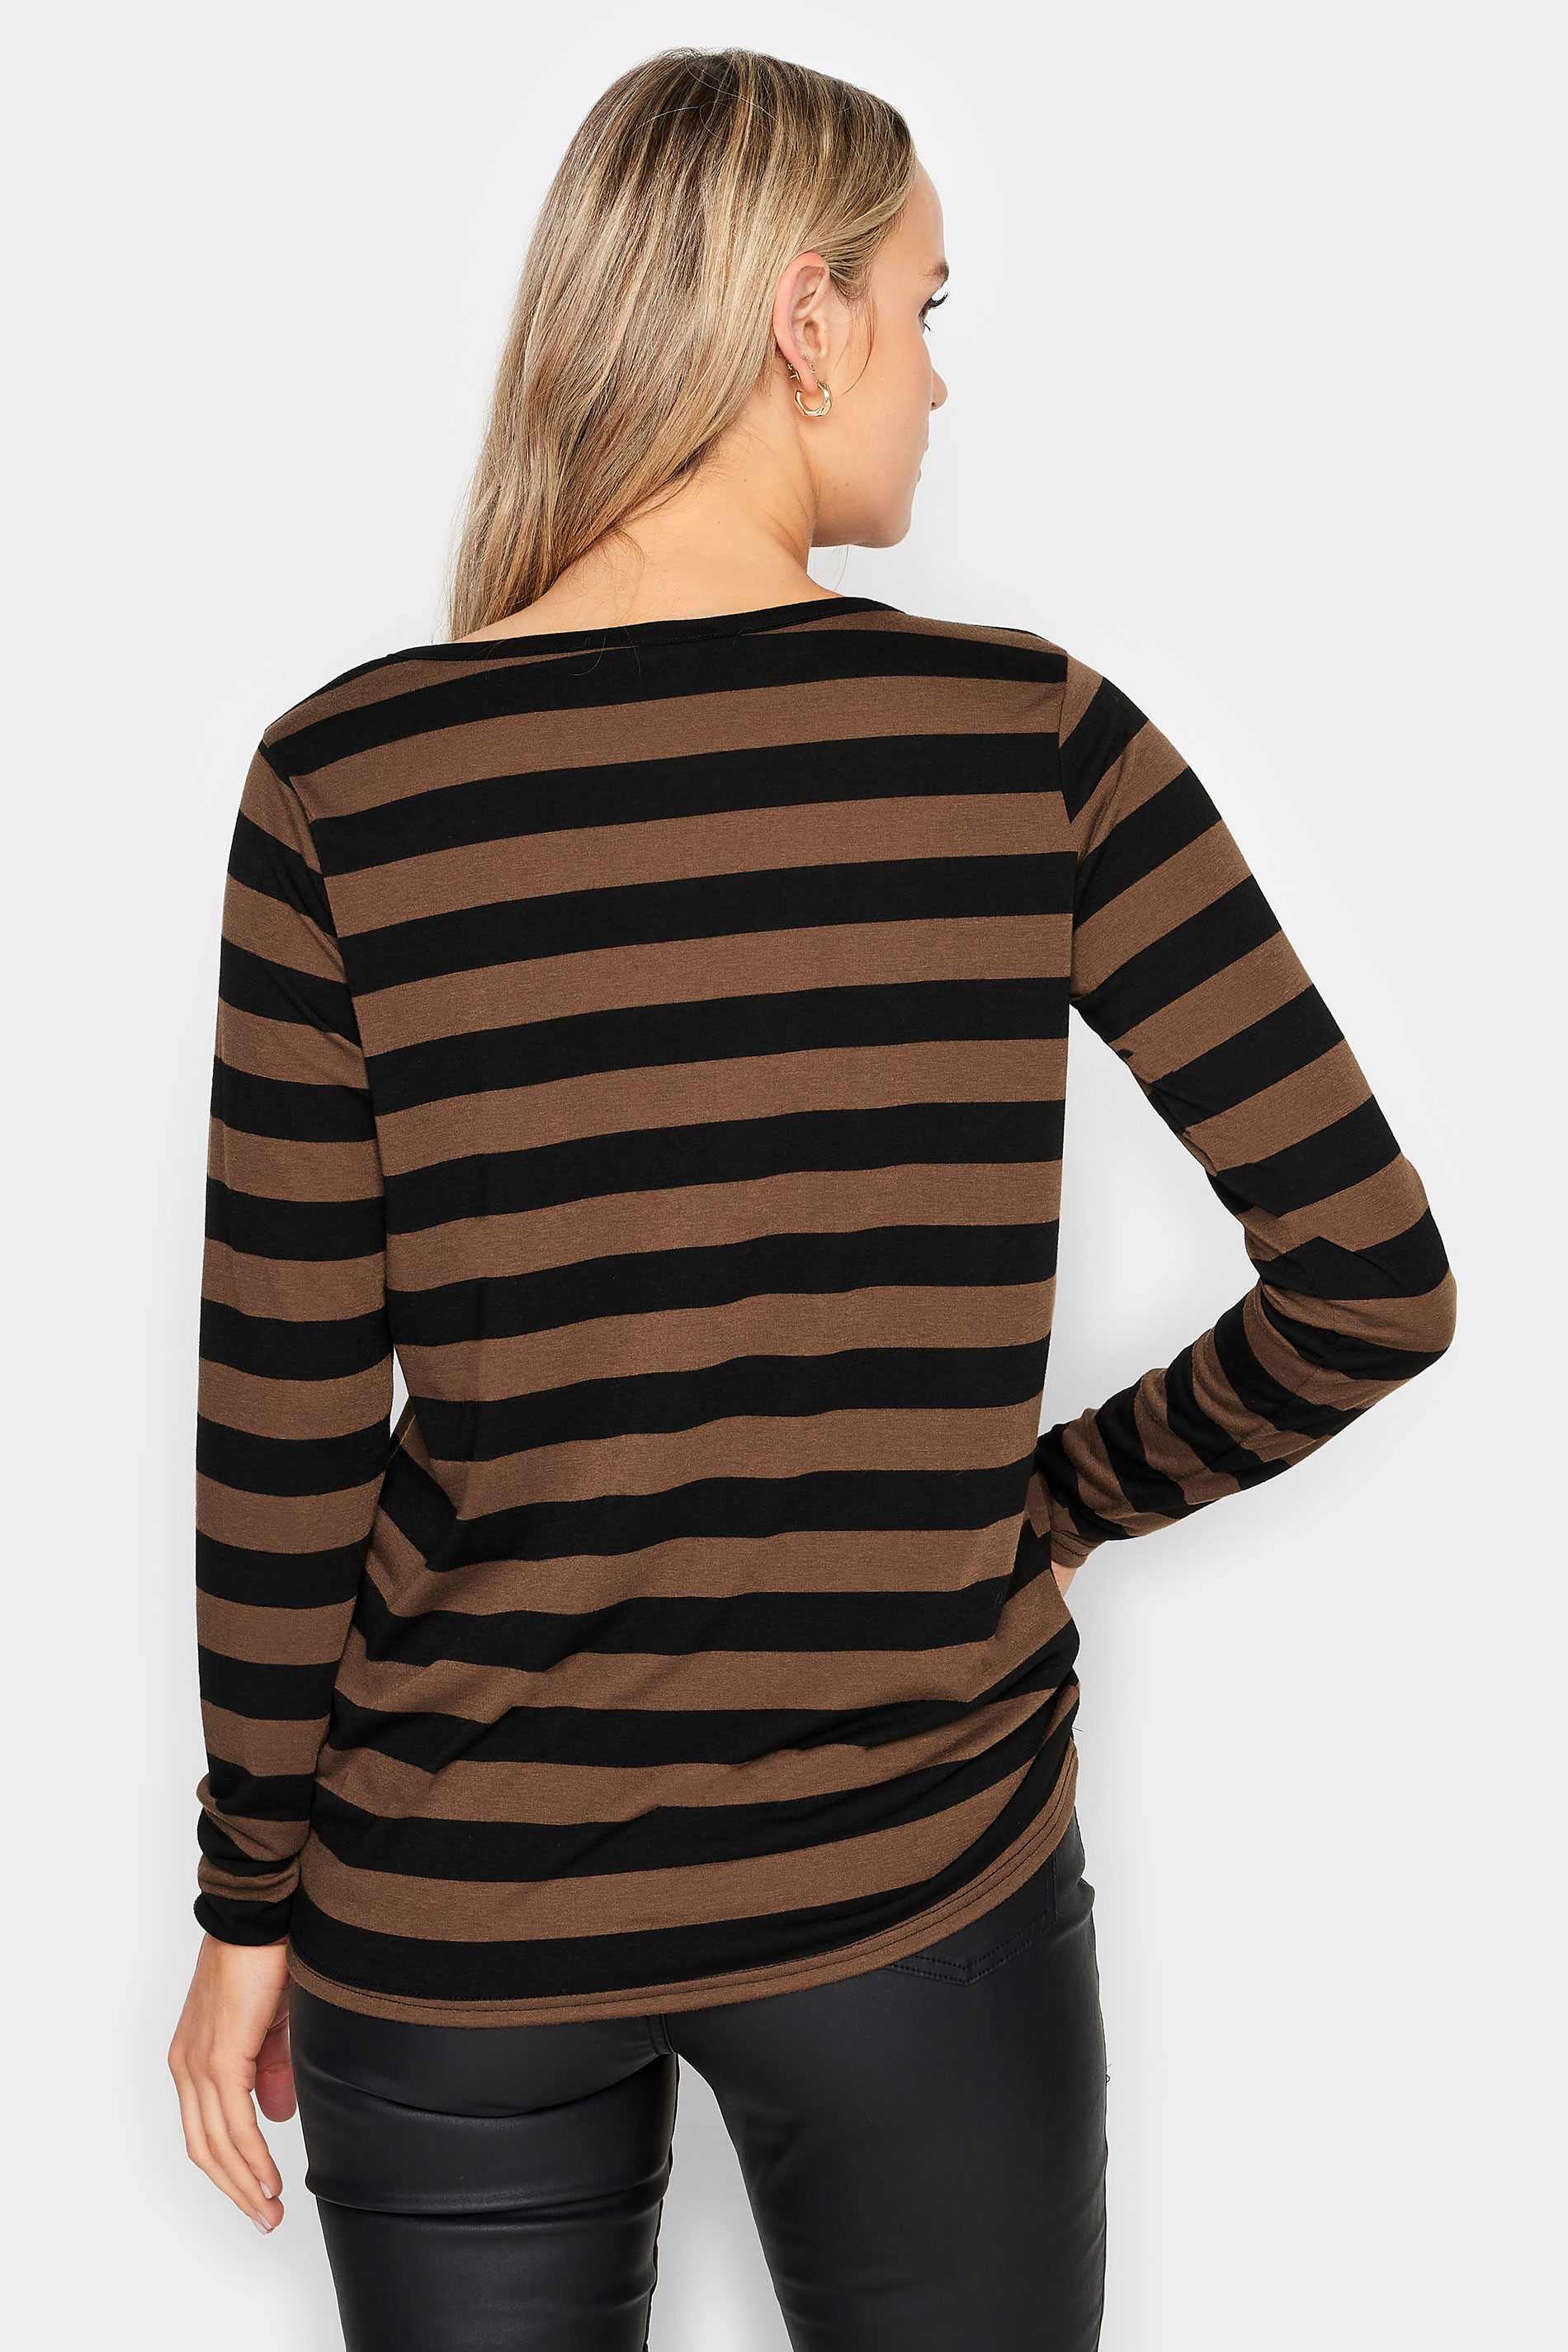 LTS Tall Brown & Black Stripe Long Sleeve Top | Long Tall Sally  3